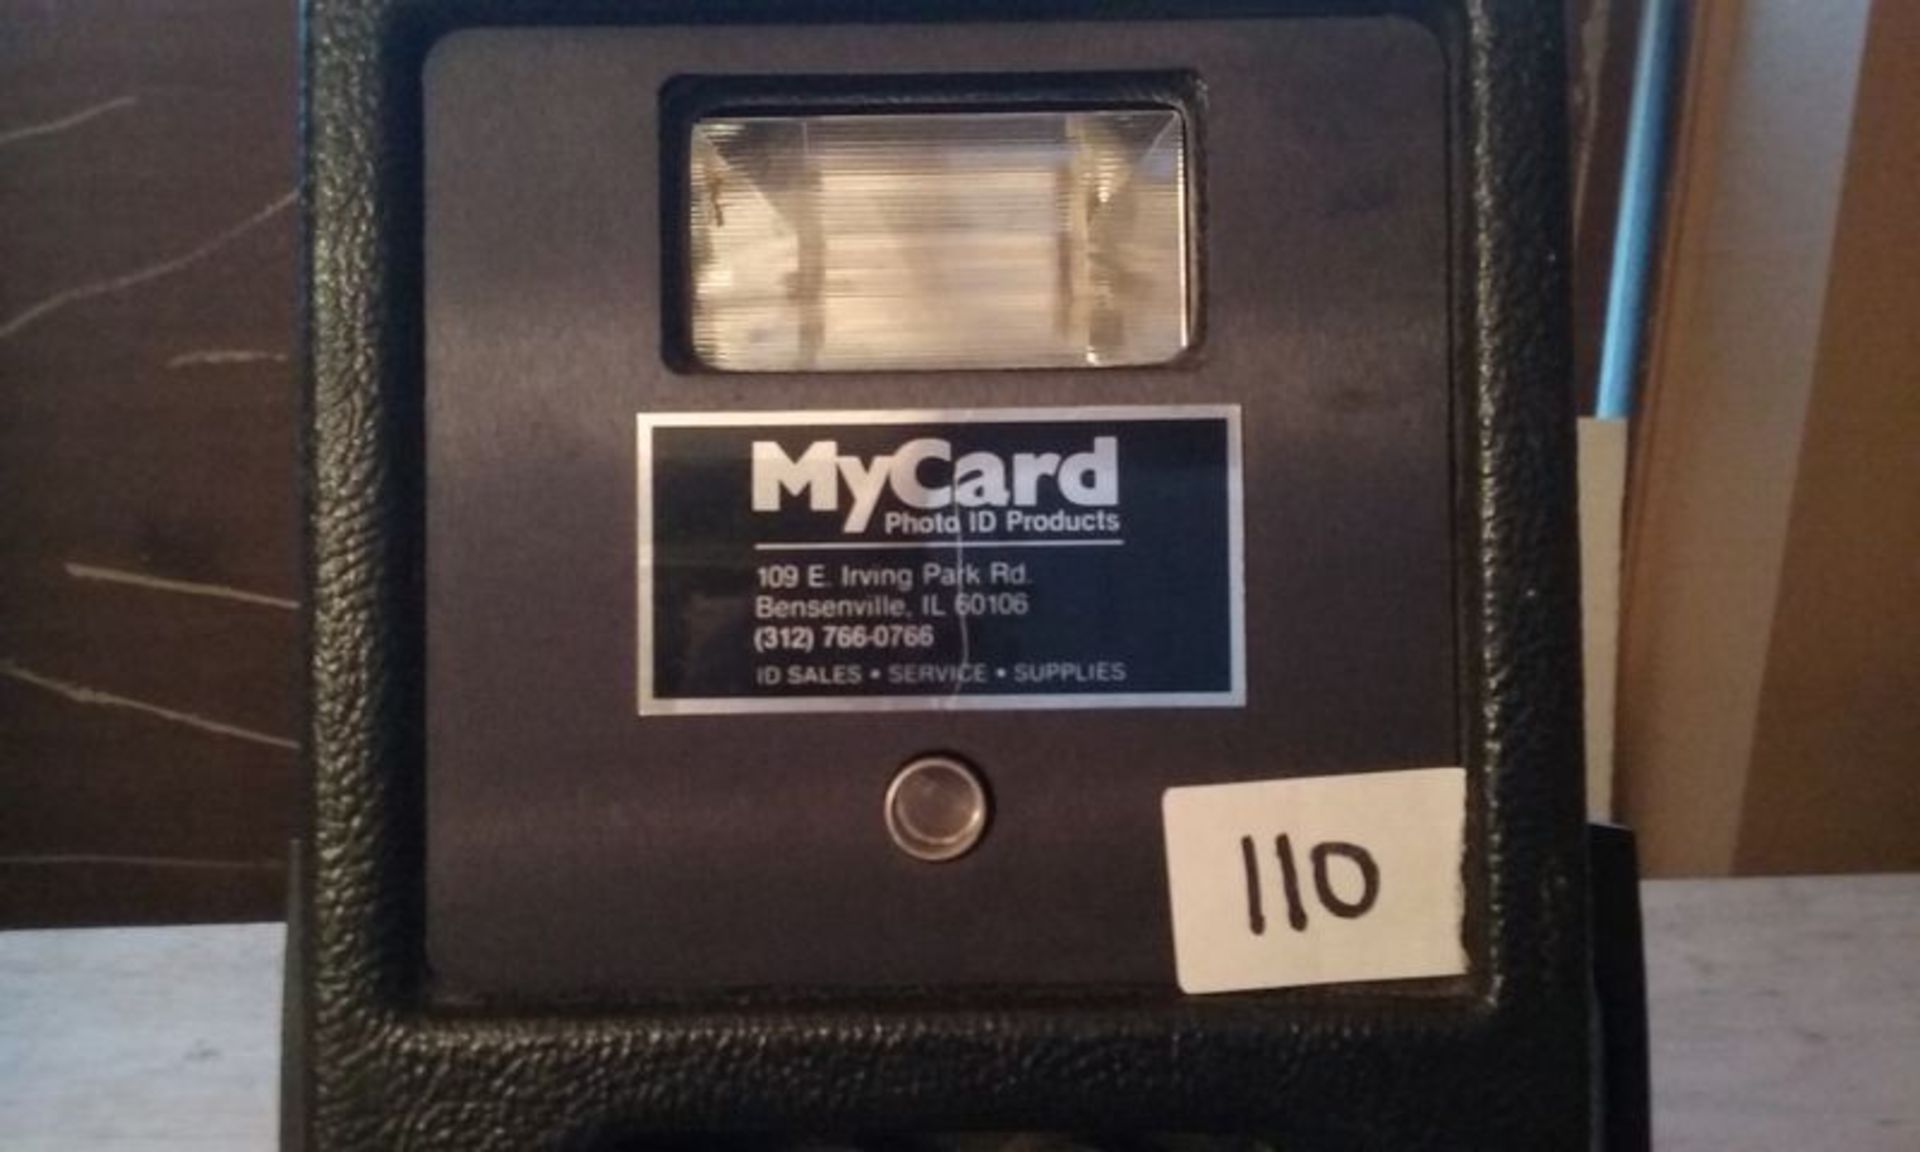 MYCARD PHOTO ID PRODUCTS - Image 2 of 4